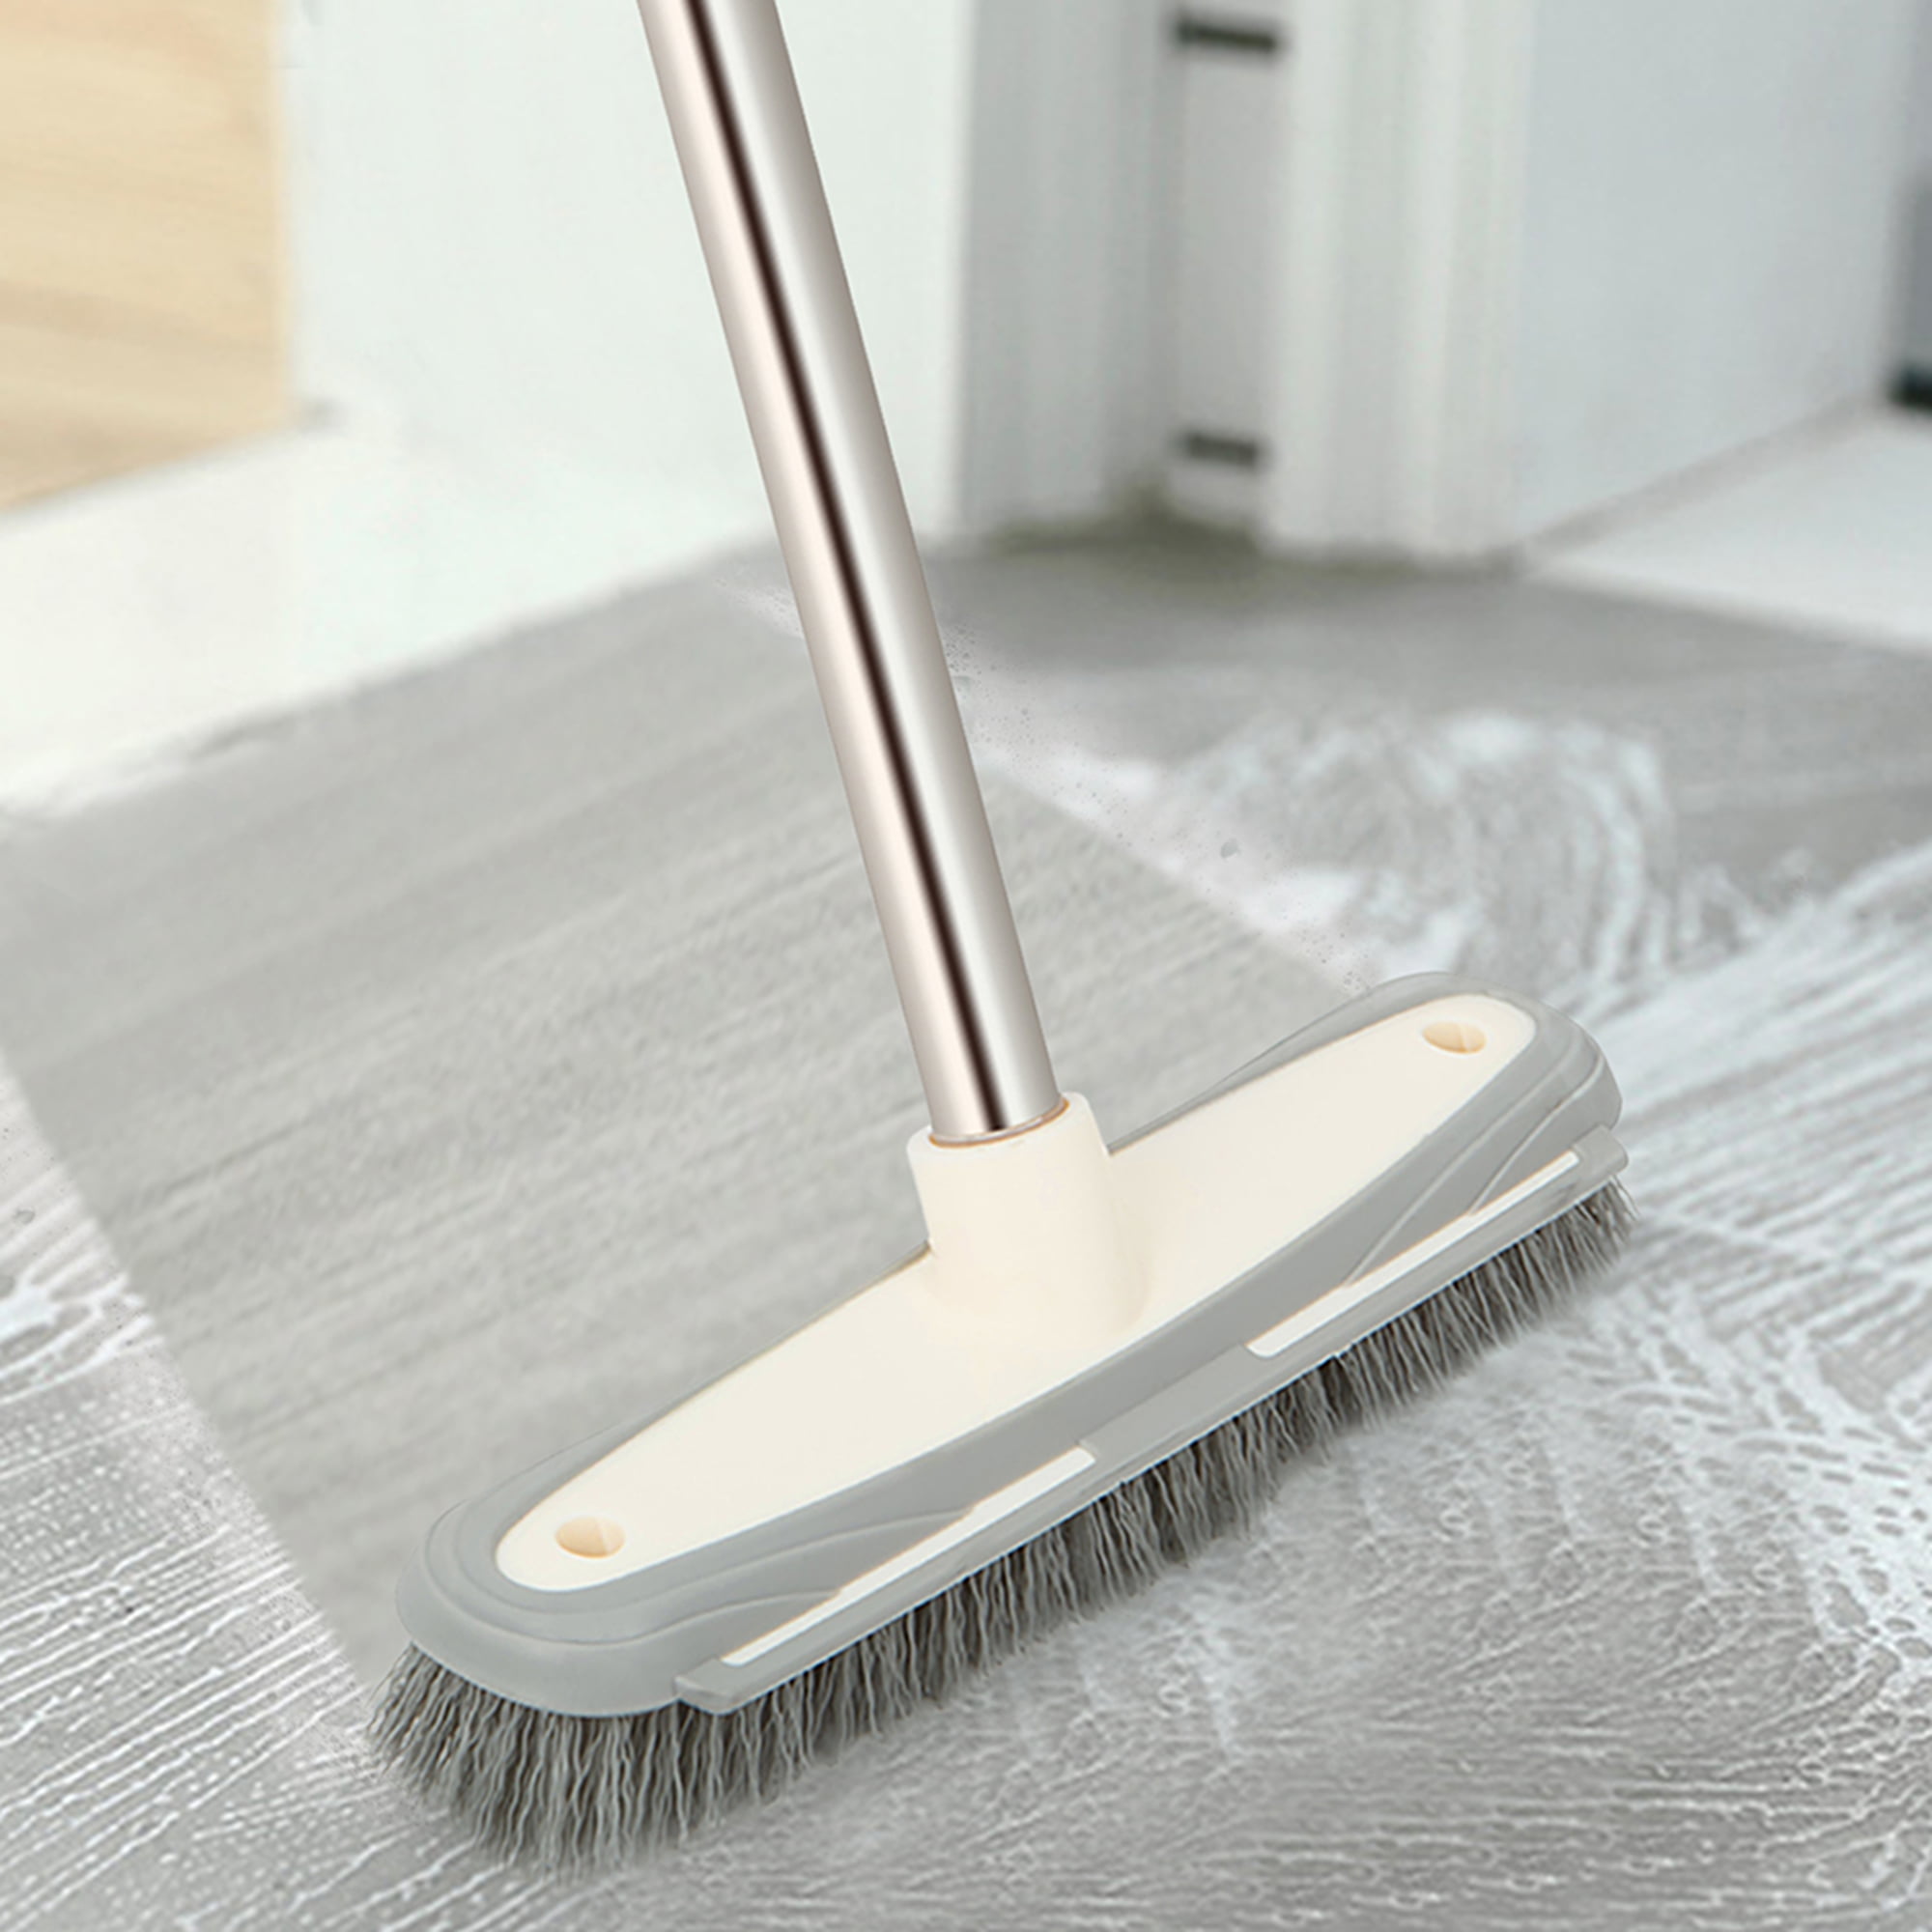 Multipurpose Floor Scrub Brush,Stainless Metal Handle, Scrubber with Stainless Steel Scrubber With Handle